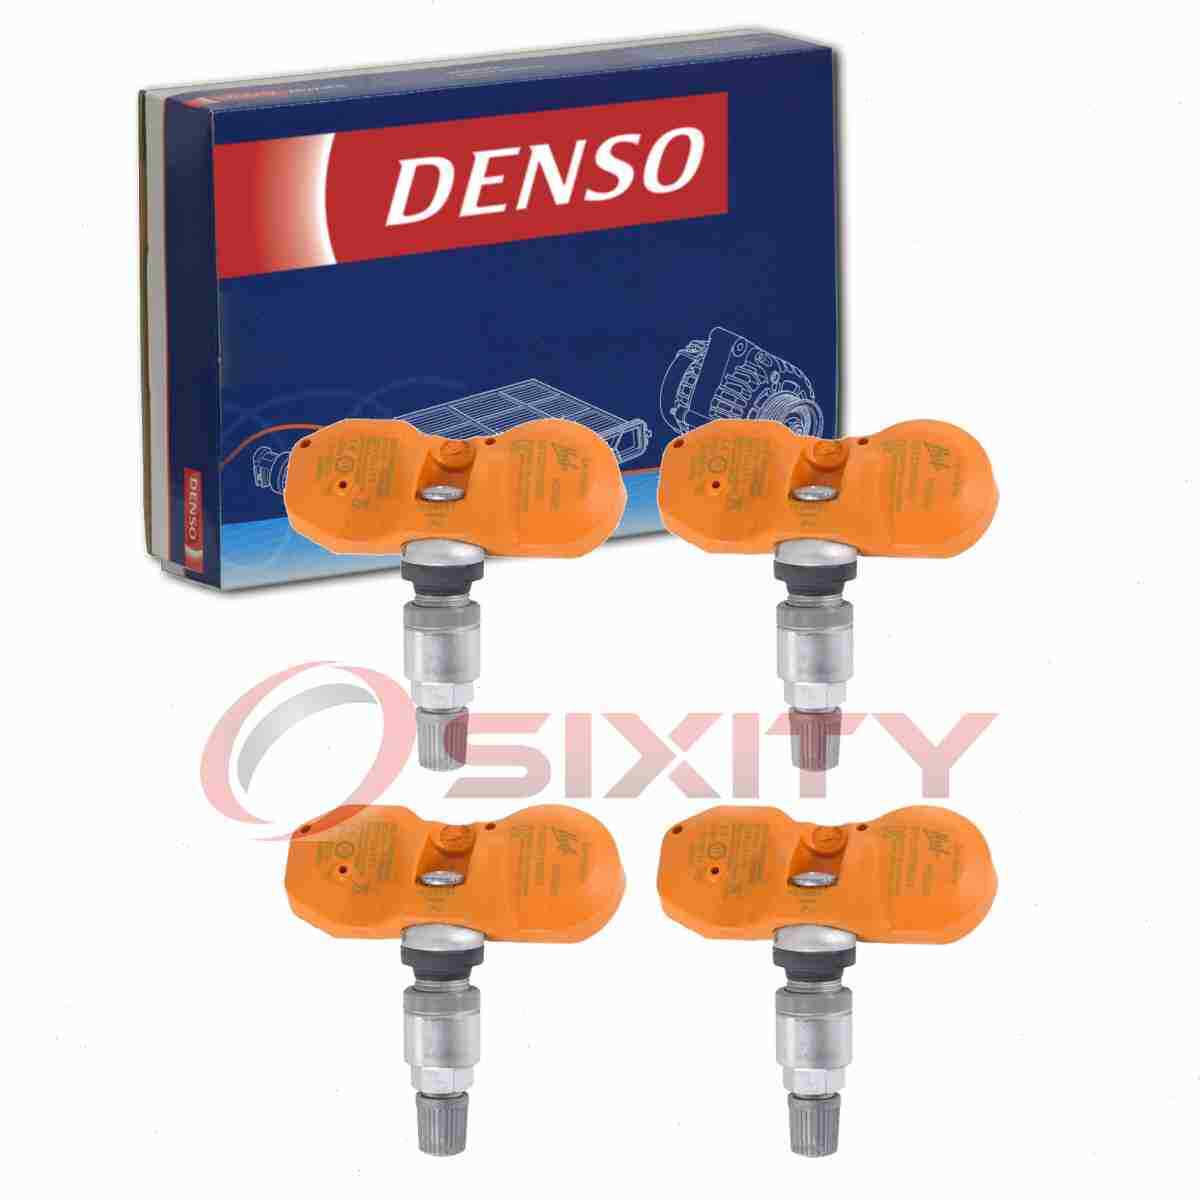 4 pc Denso Tire Pressure Monitoring System Sensors for 2001 Ferrari 550 nc